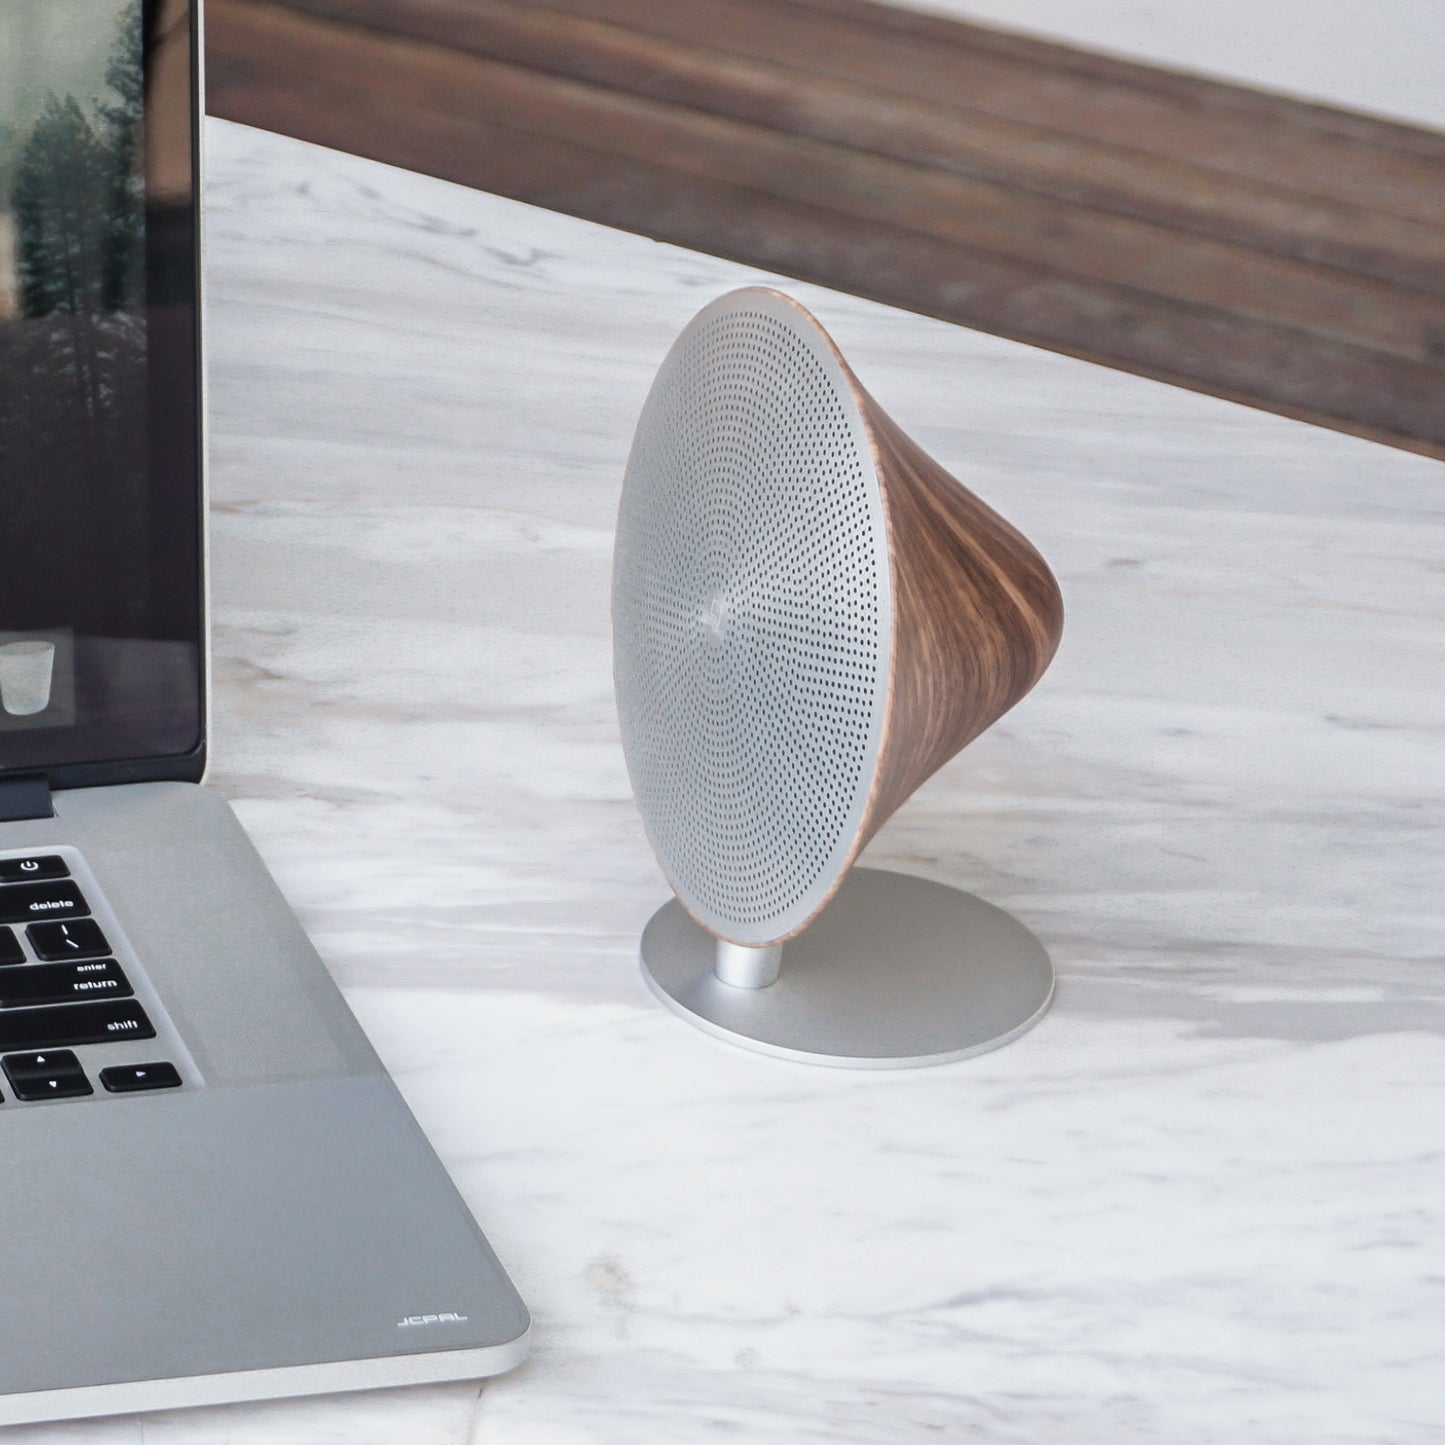 gingko mini halo one speaker next to MacBook pro